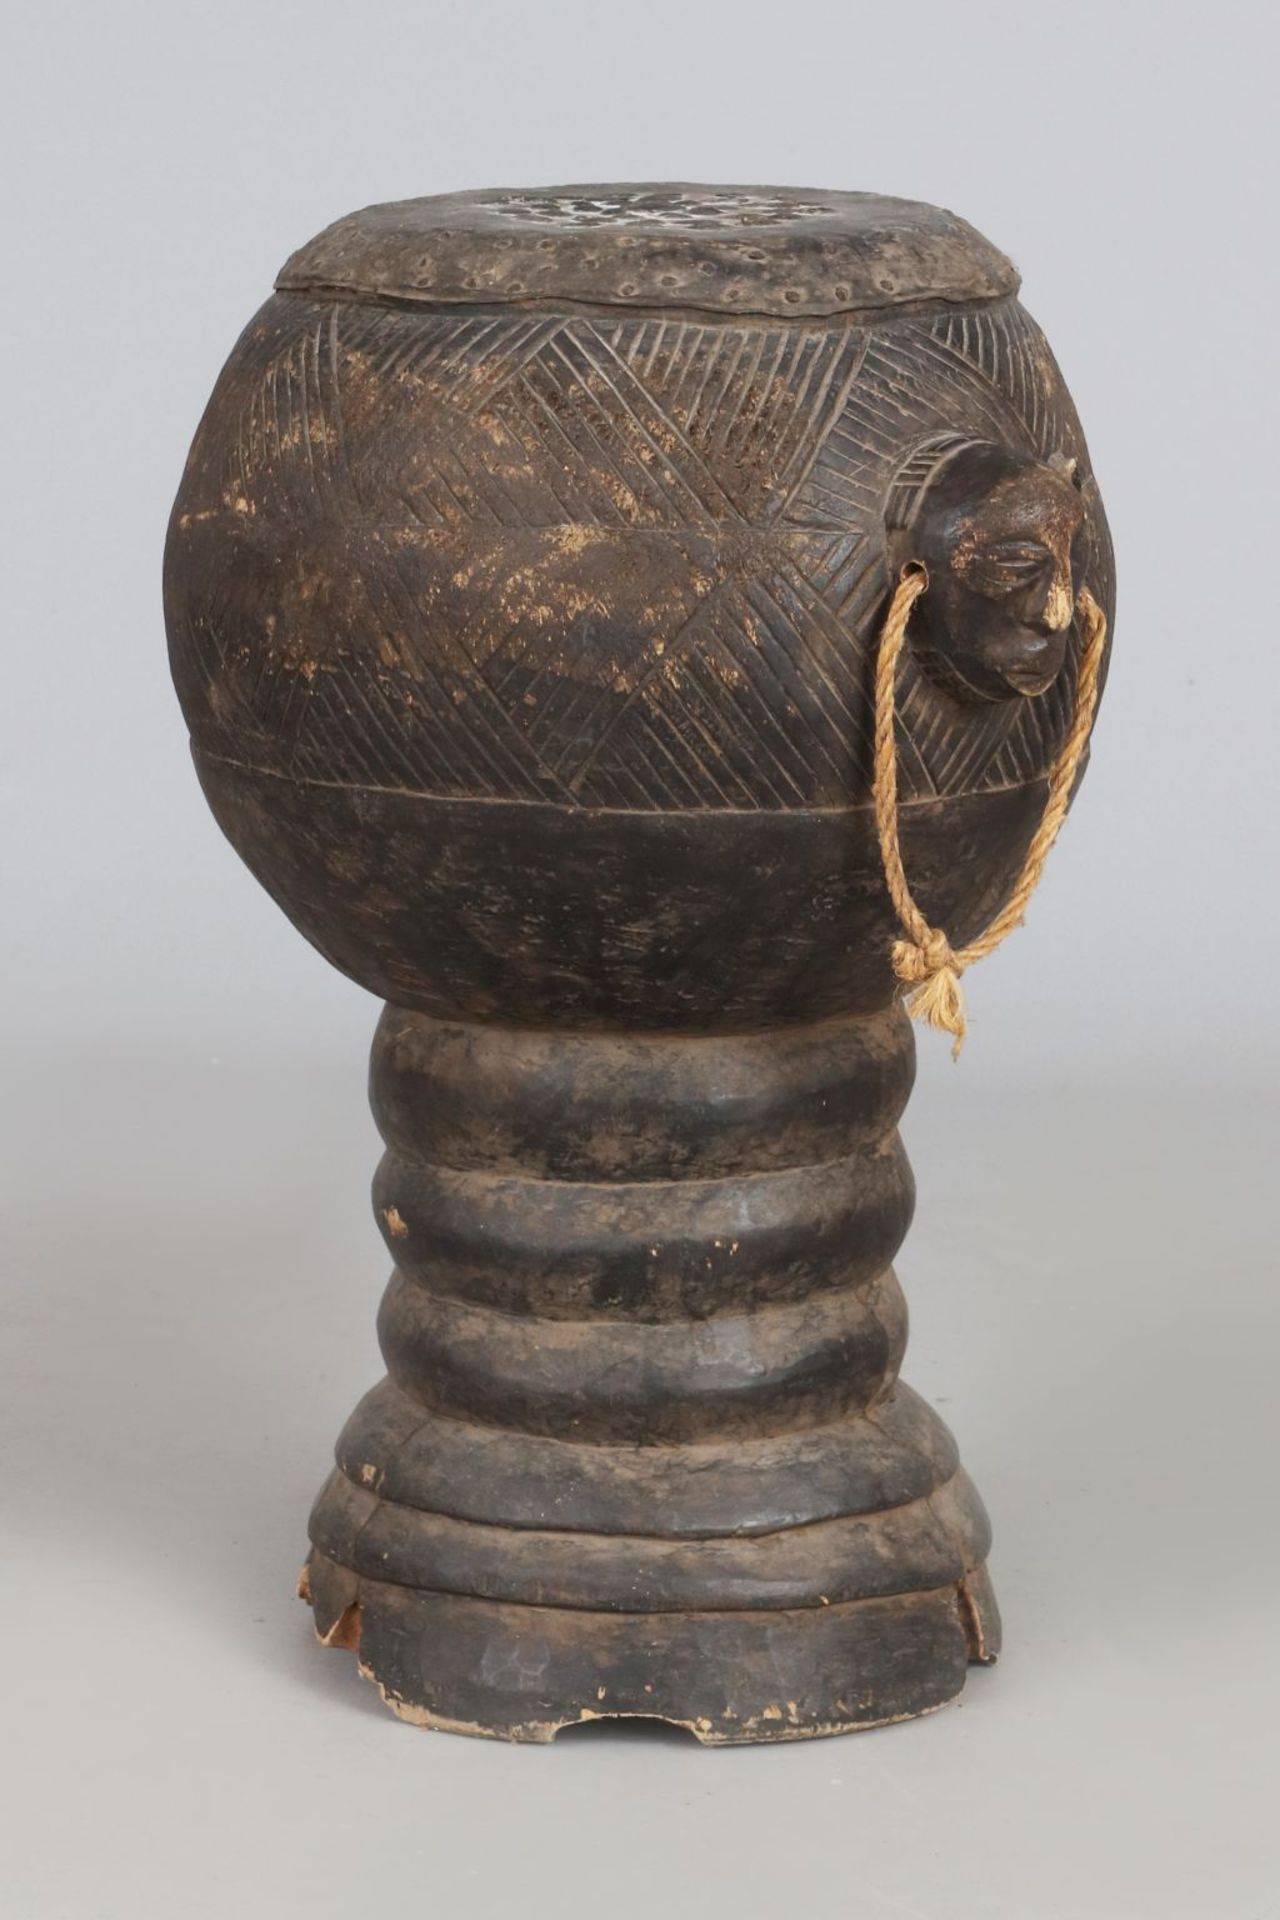 Afrikanische Trommel, wohl SongyeKongo, vermutlich 1. Hälfte 20. Jahrhundert, kalebassenförmi